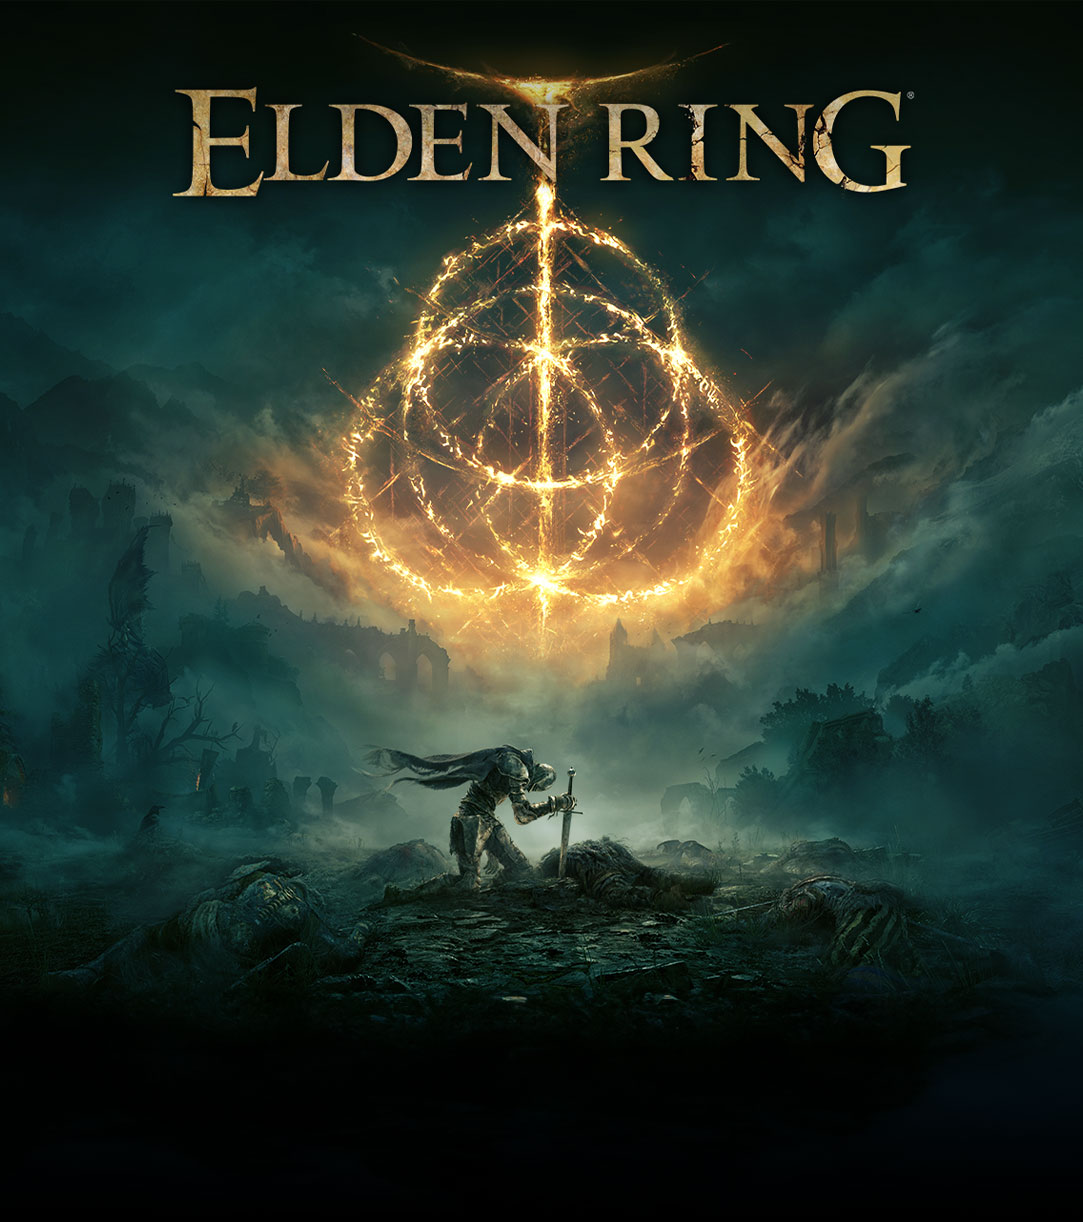 Elden Ring。多個燃燒著的戒指組成 Elden Ring 符號。在荒蕪、濃霧的區域，騎士角色與立於地面的劍。